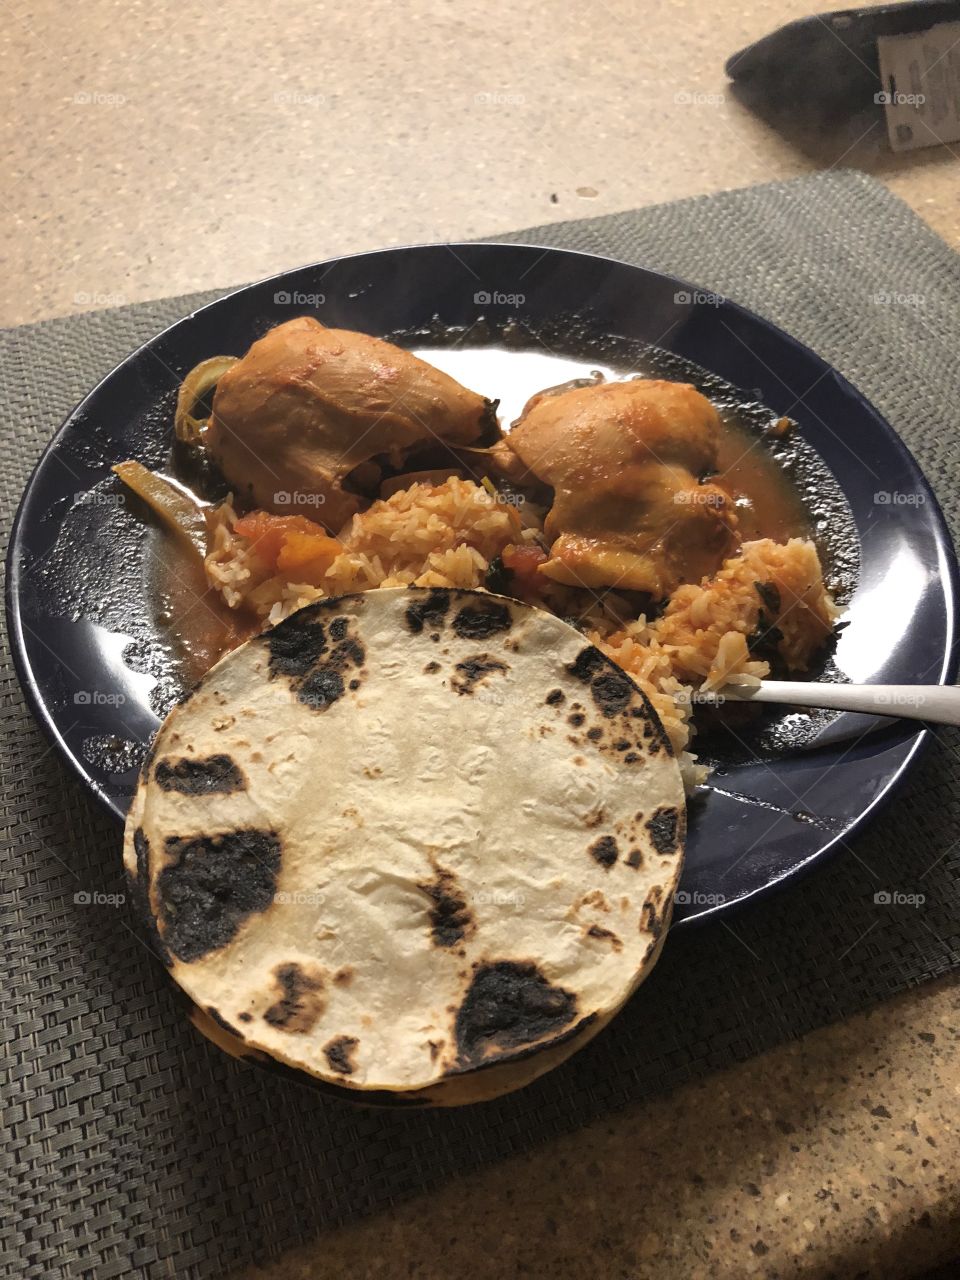 Chicken guisado, rice, and tortillas 😌😛